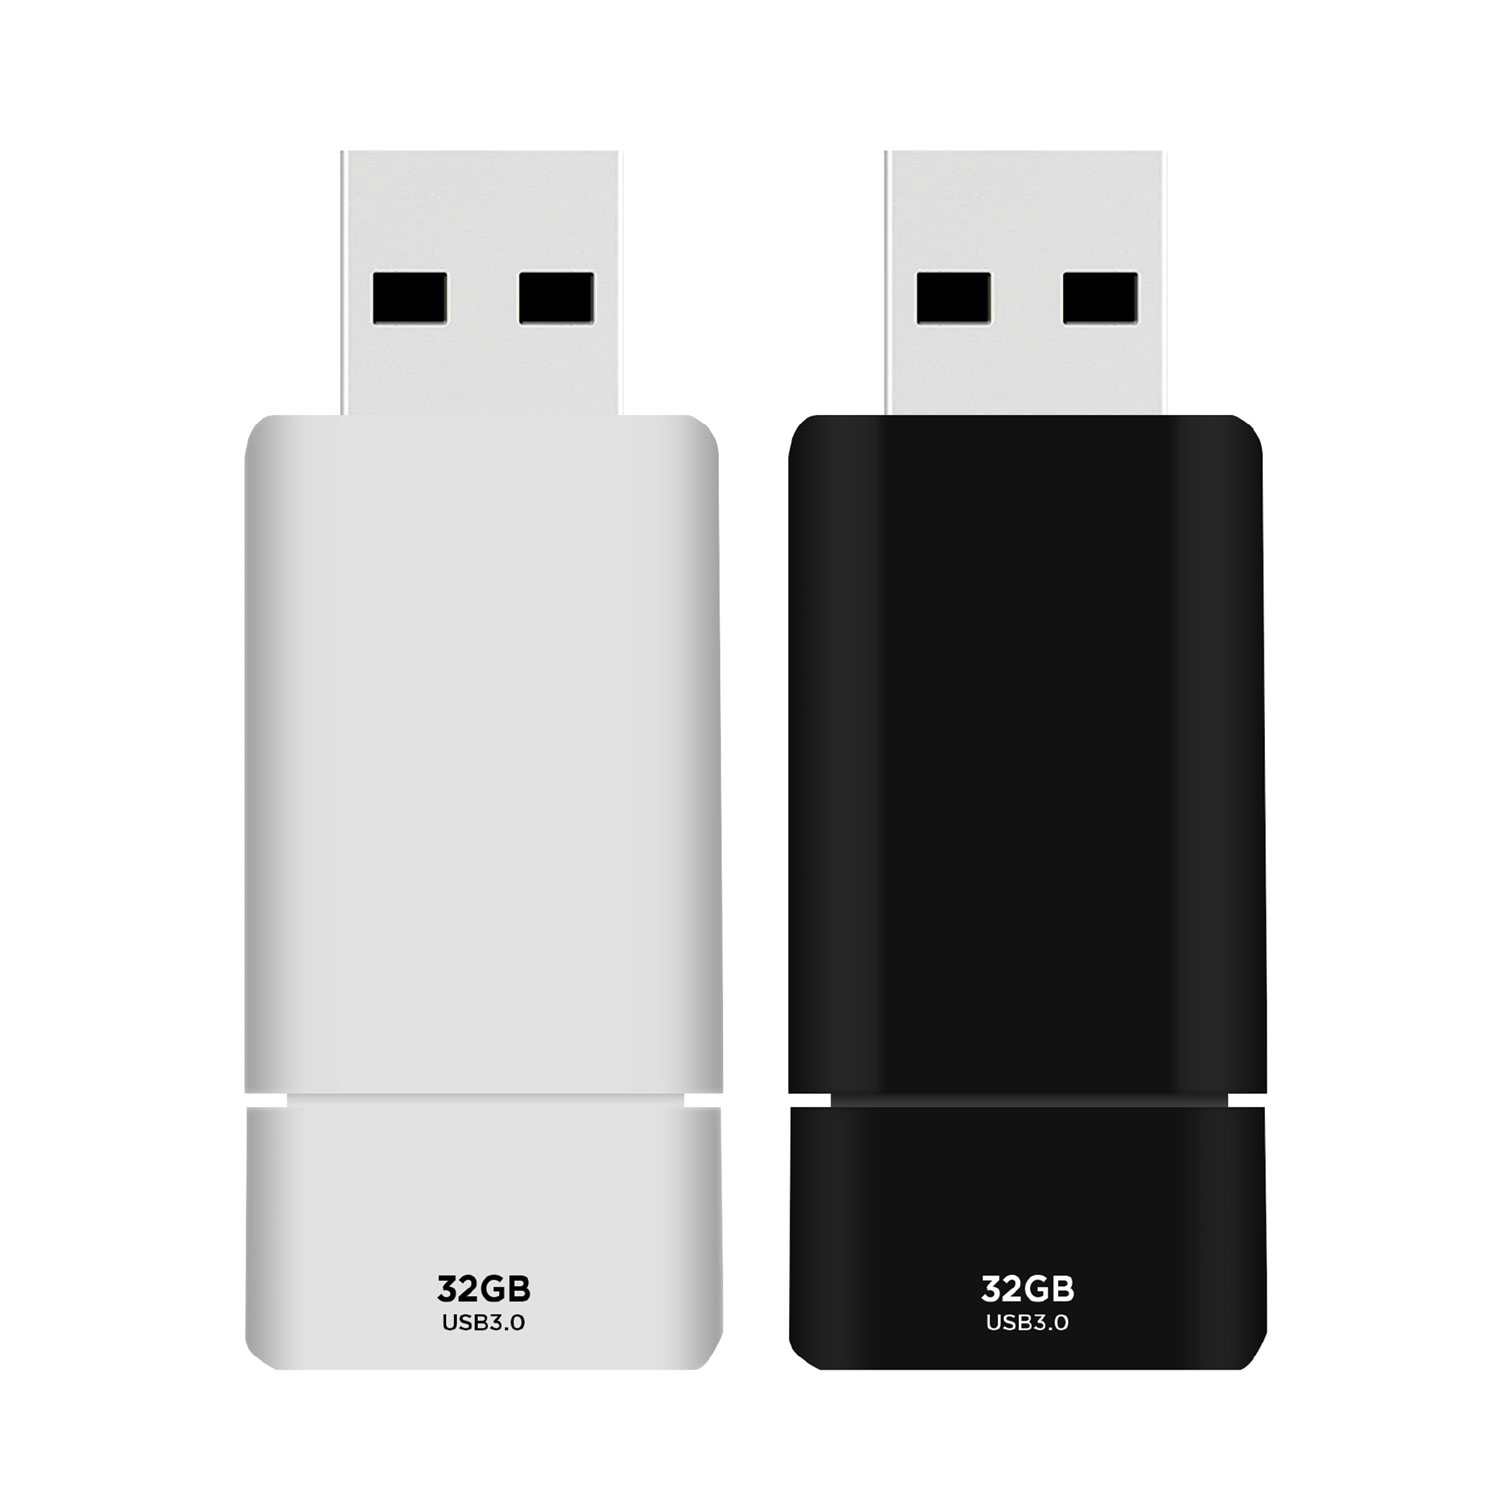  Gigastone TE-U332GBX2-R USB 3.0 Flash Drive, 32 GB, 2 Assorted Colors (GGS24387007) 